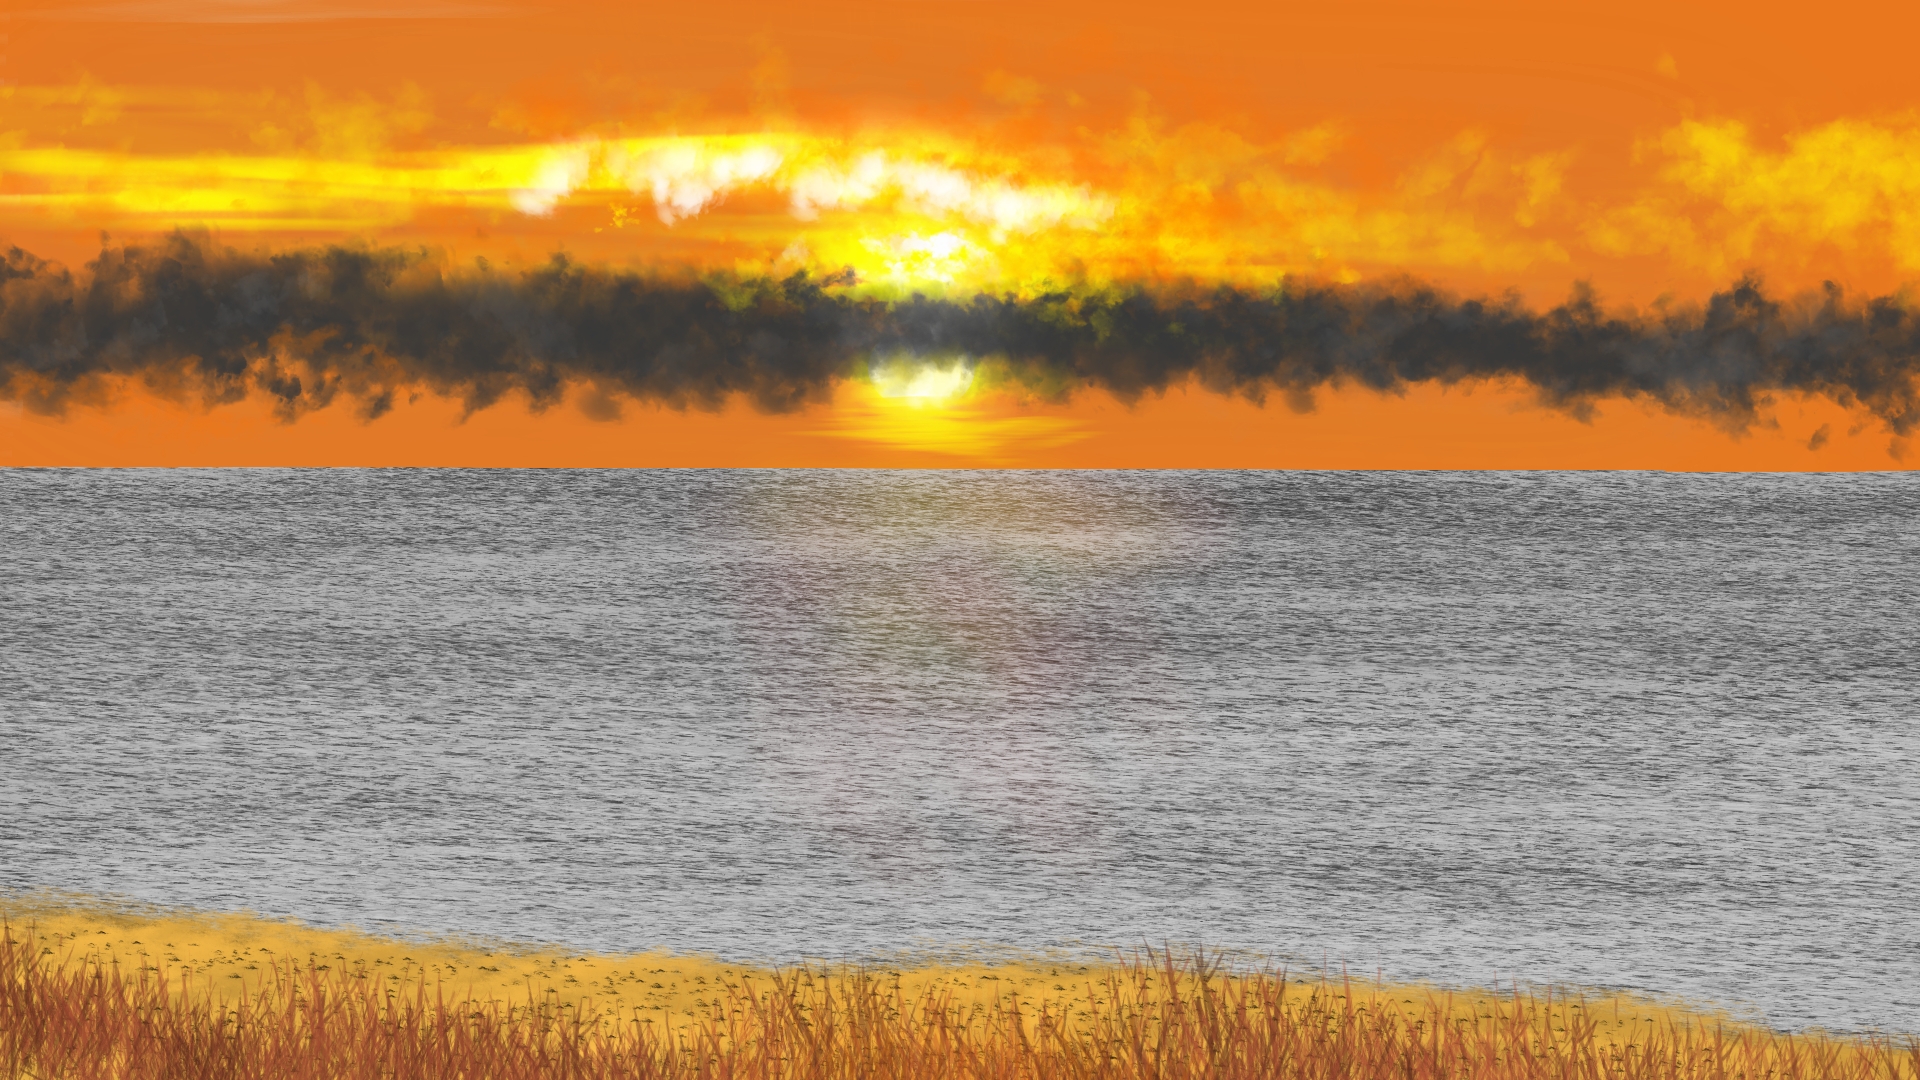 Digital Painting Digital Art Nature Shoreline Dusk 1920x1080